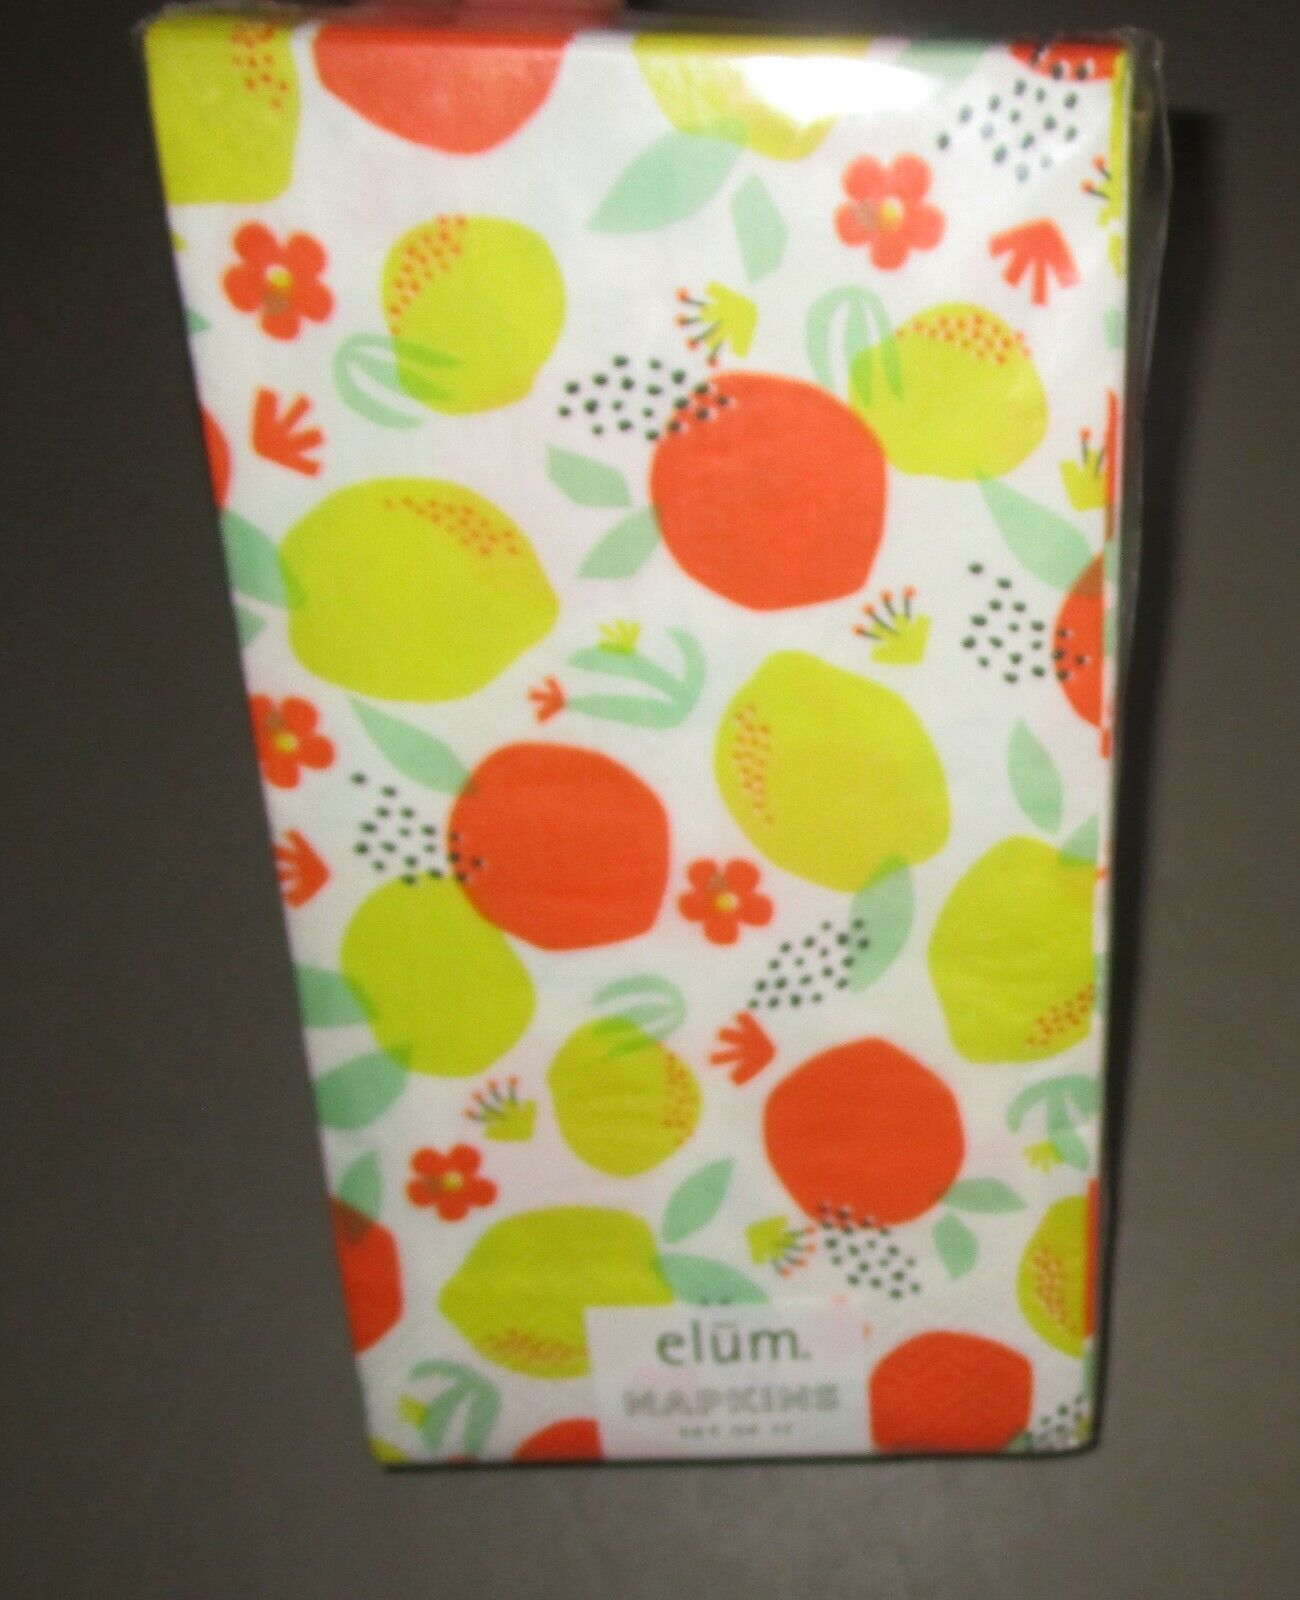 ELUM~32 Count CITRUS Overseas Dedication parallel import regular item LEMON & Guest Paper ORANGE Napkins